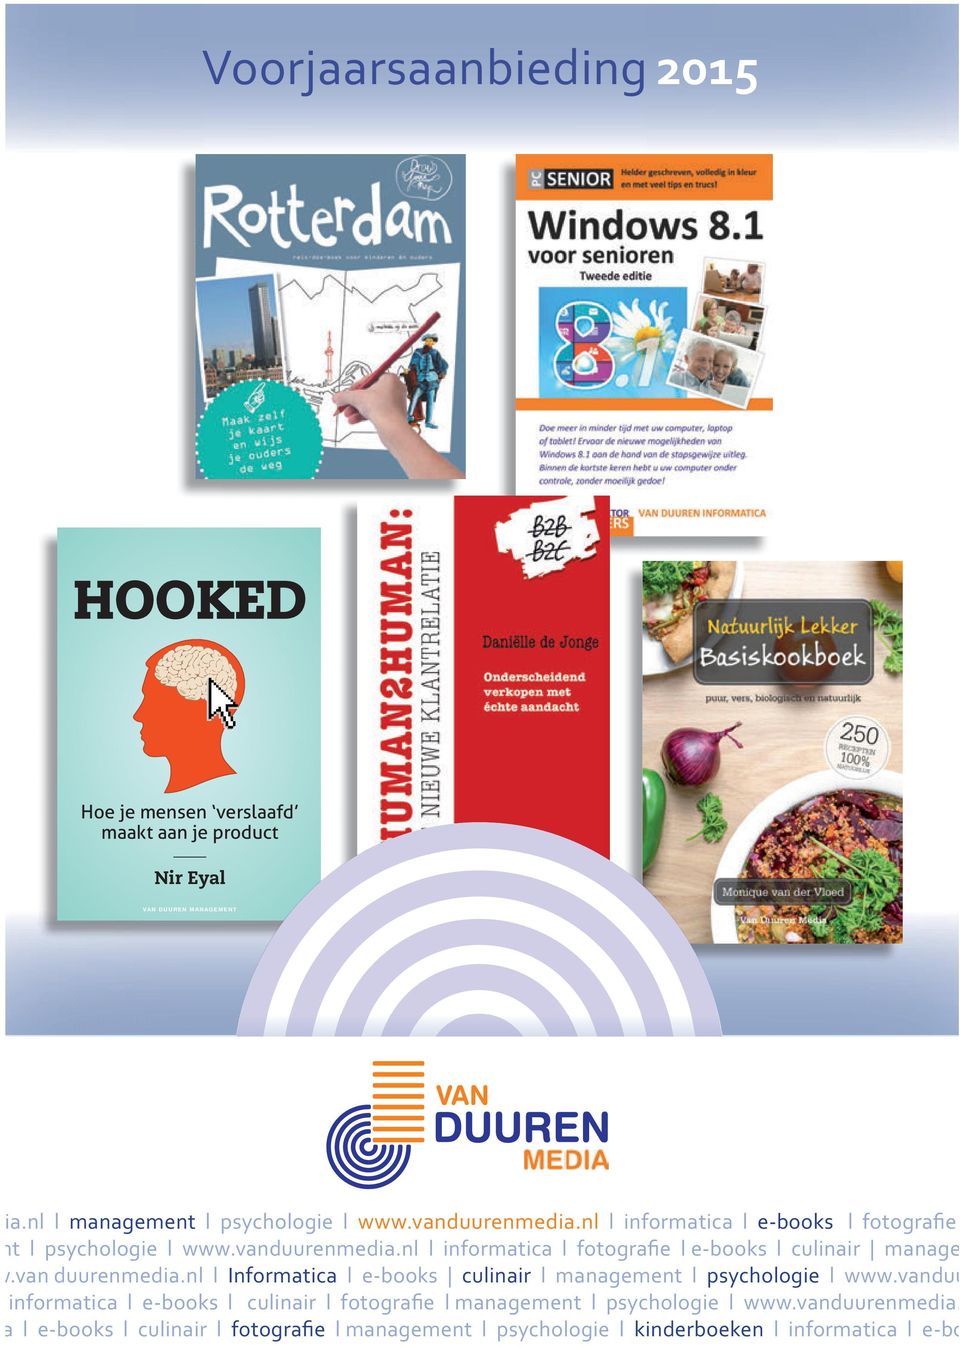 van duurenmedia.nl l Informatica l e-books culinair l management l psychologie l www.